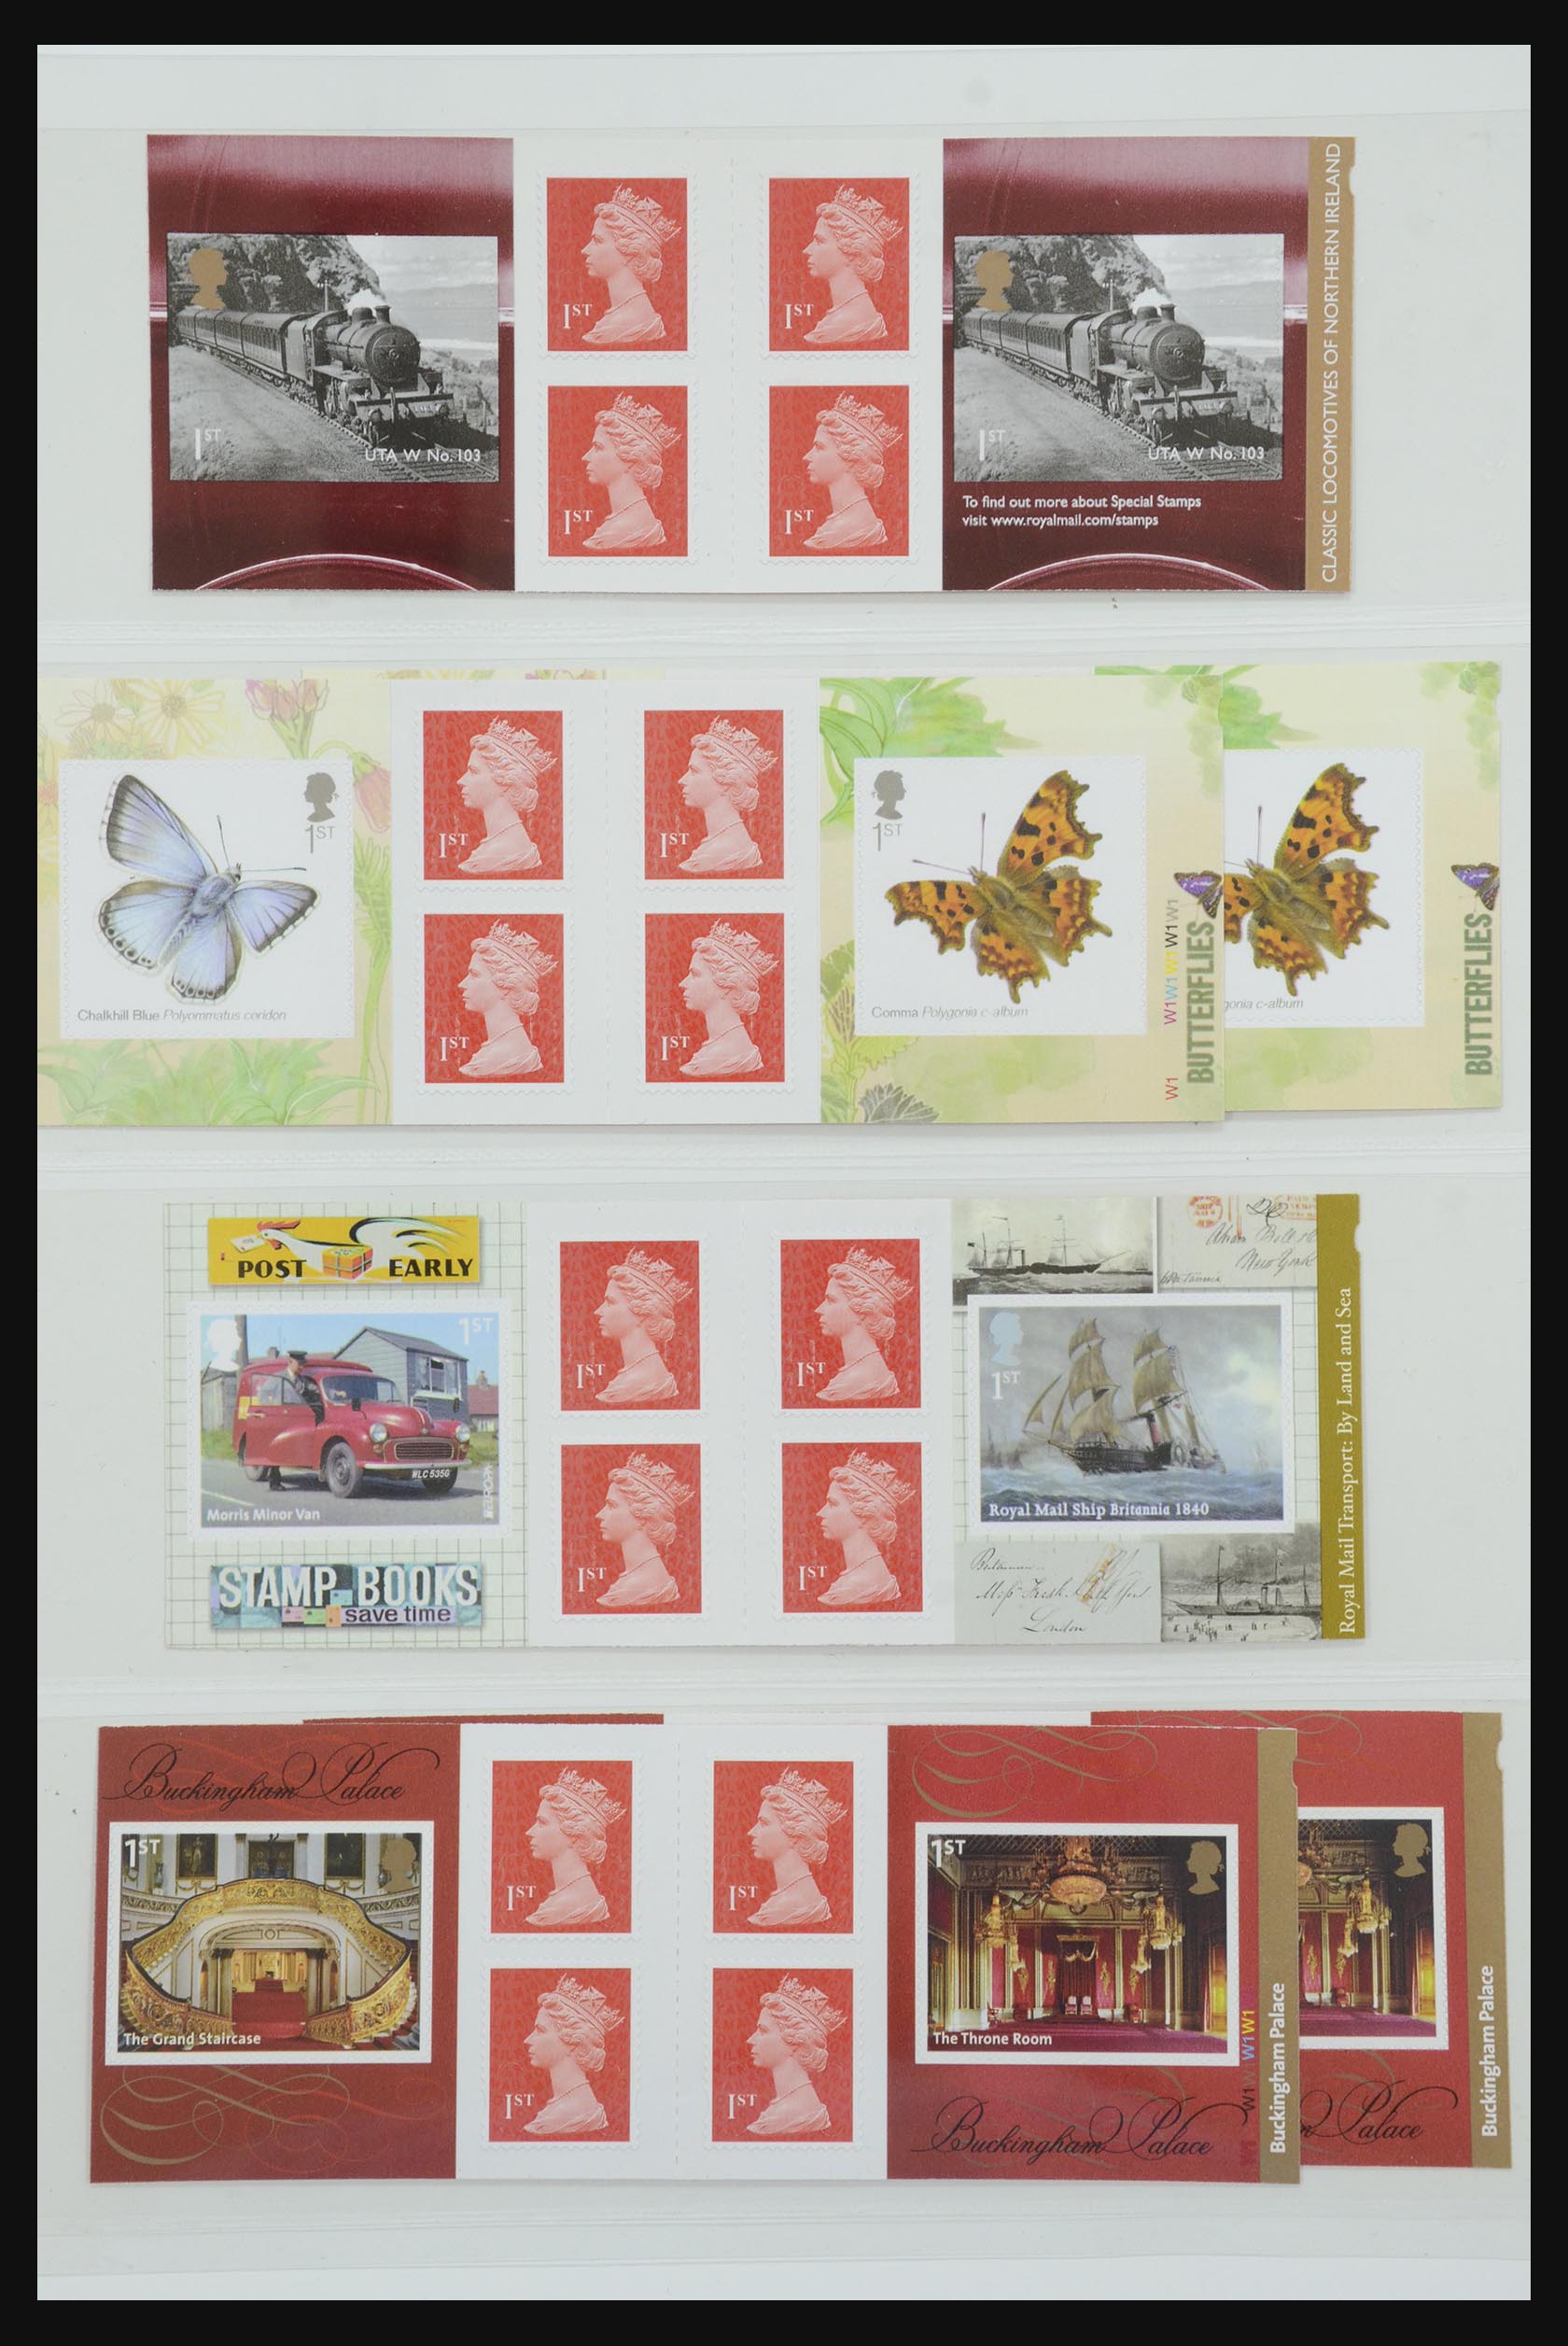 31959 388 - 31959 Great Britain stampbooklets 1987-2016!!